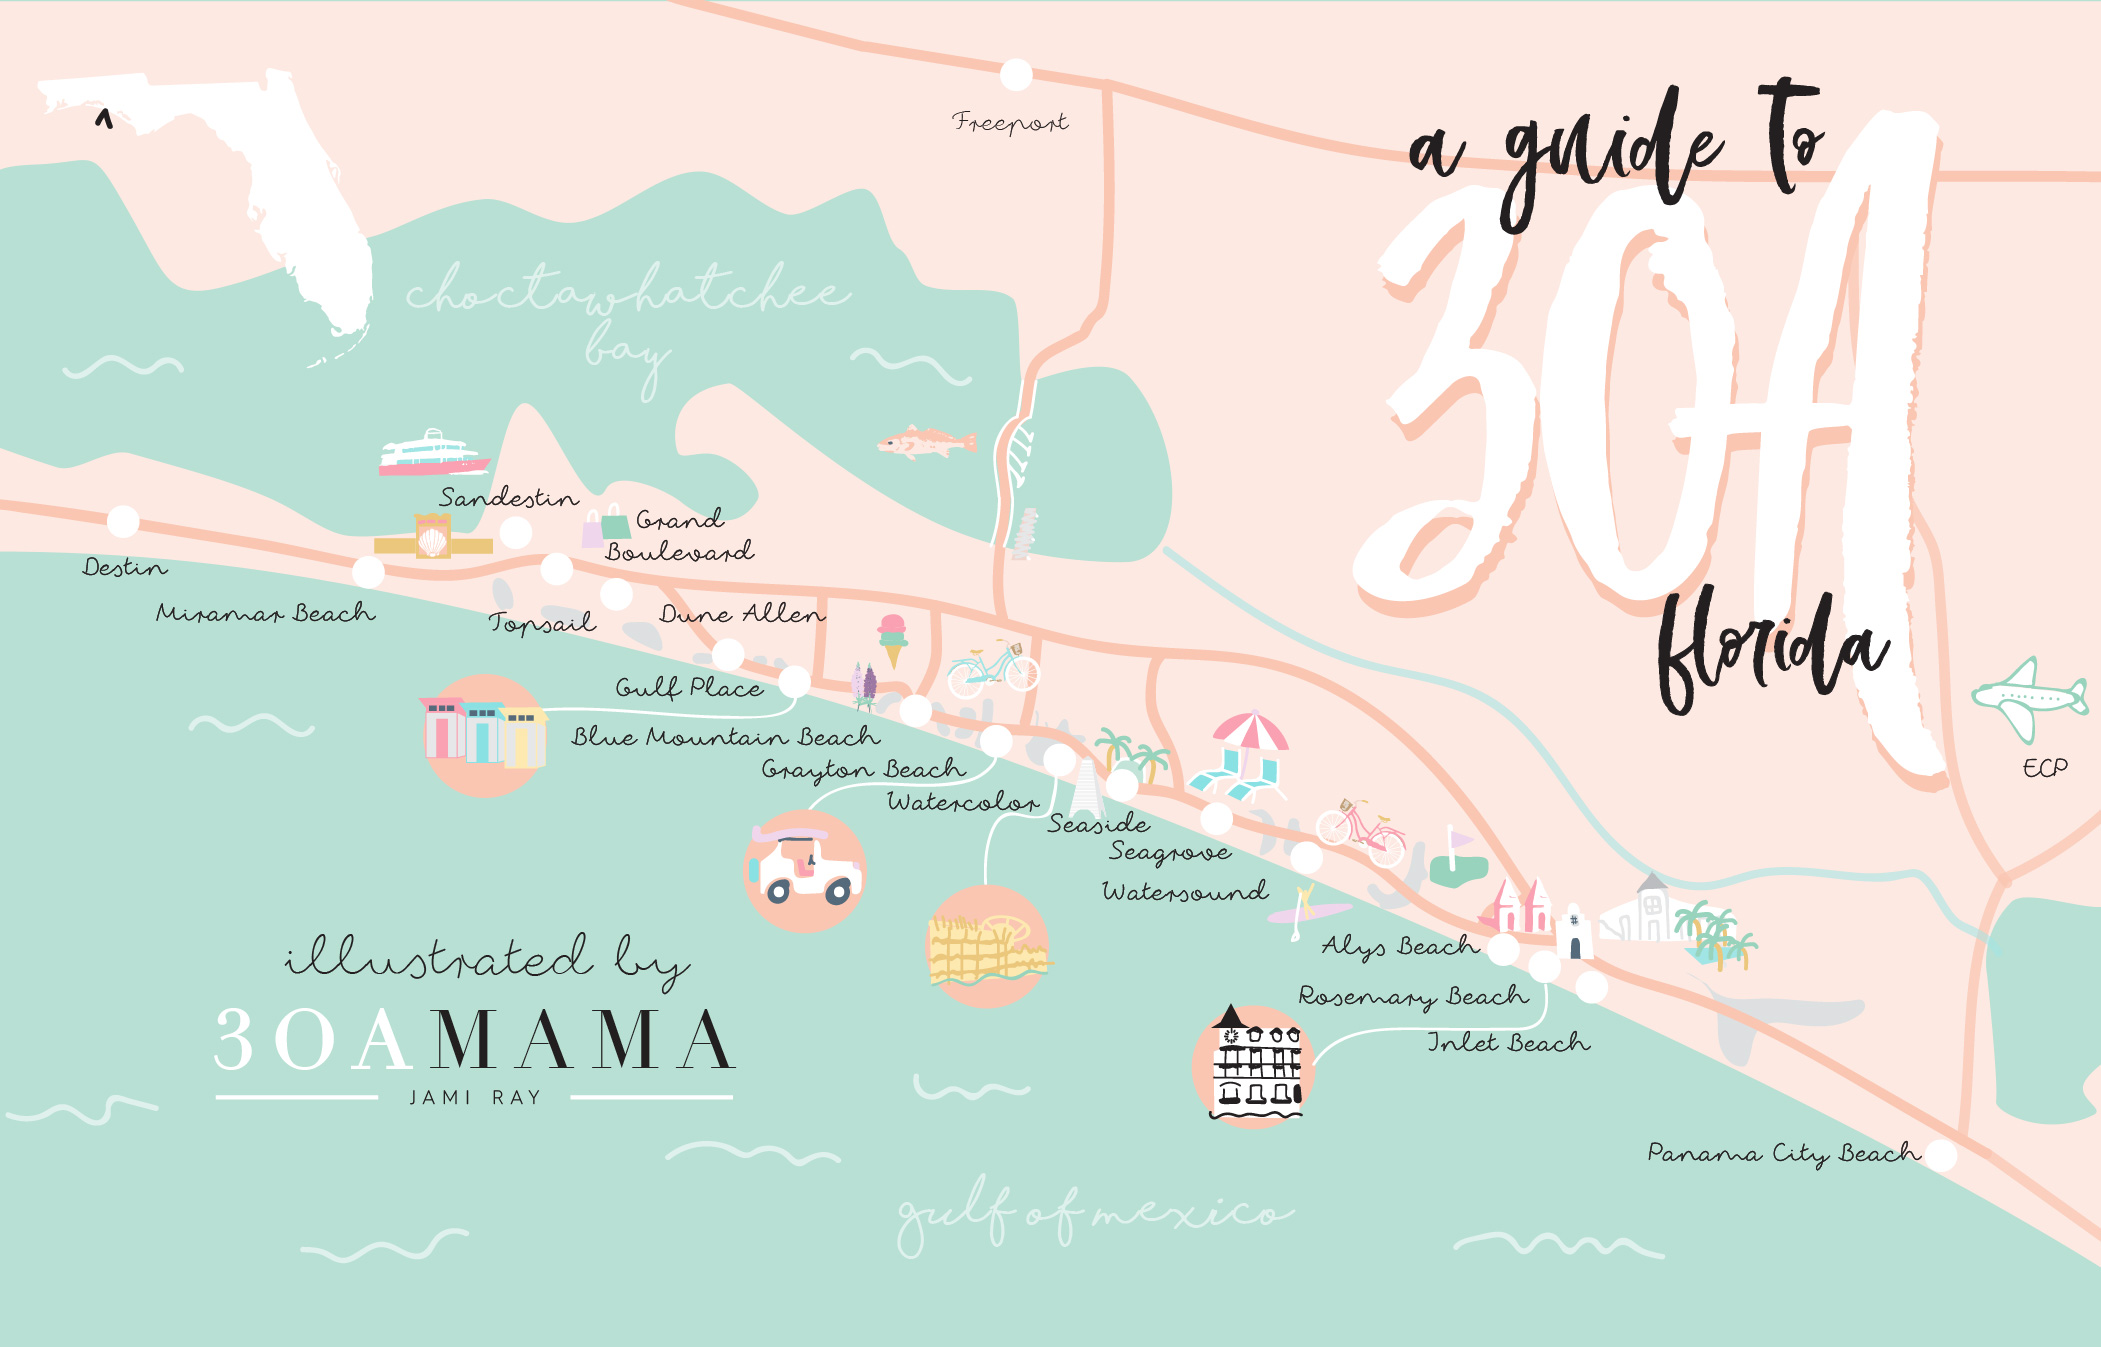 30A Mama - 30A Map Neighborhood Guide - Where to Stay on 30A